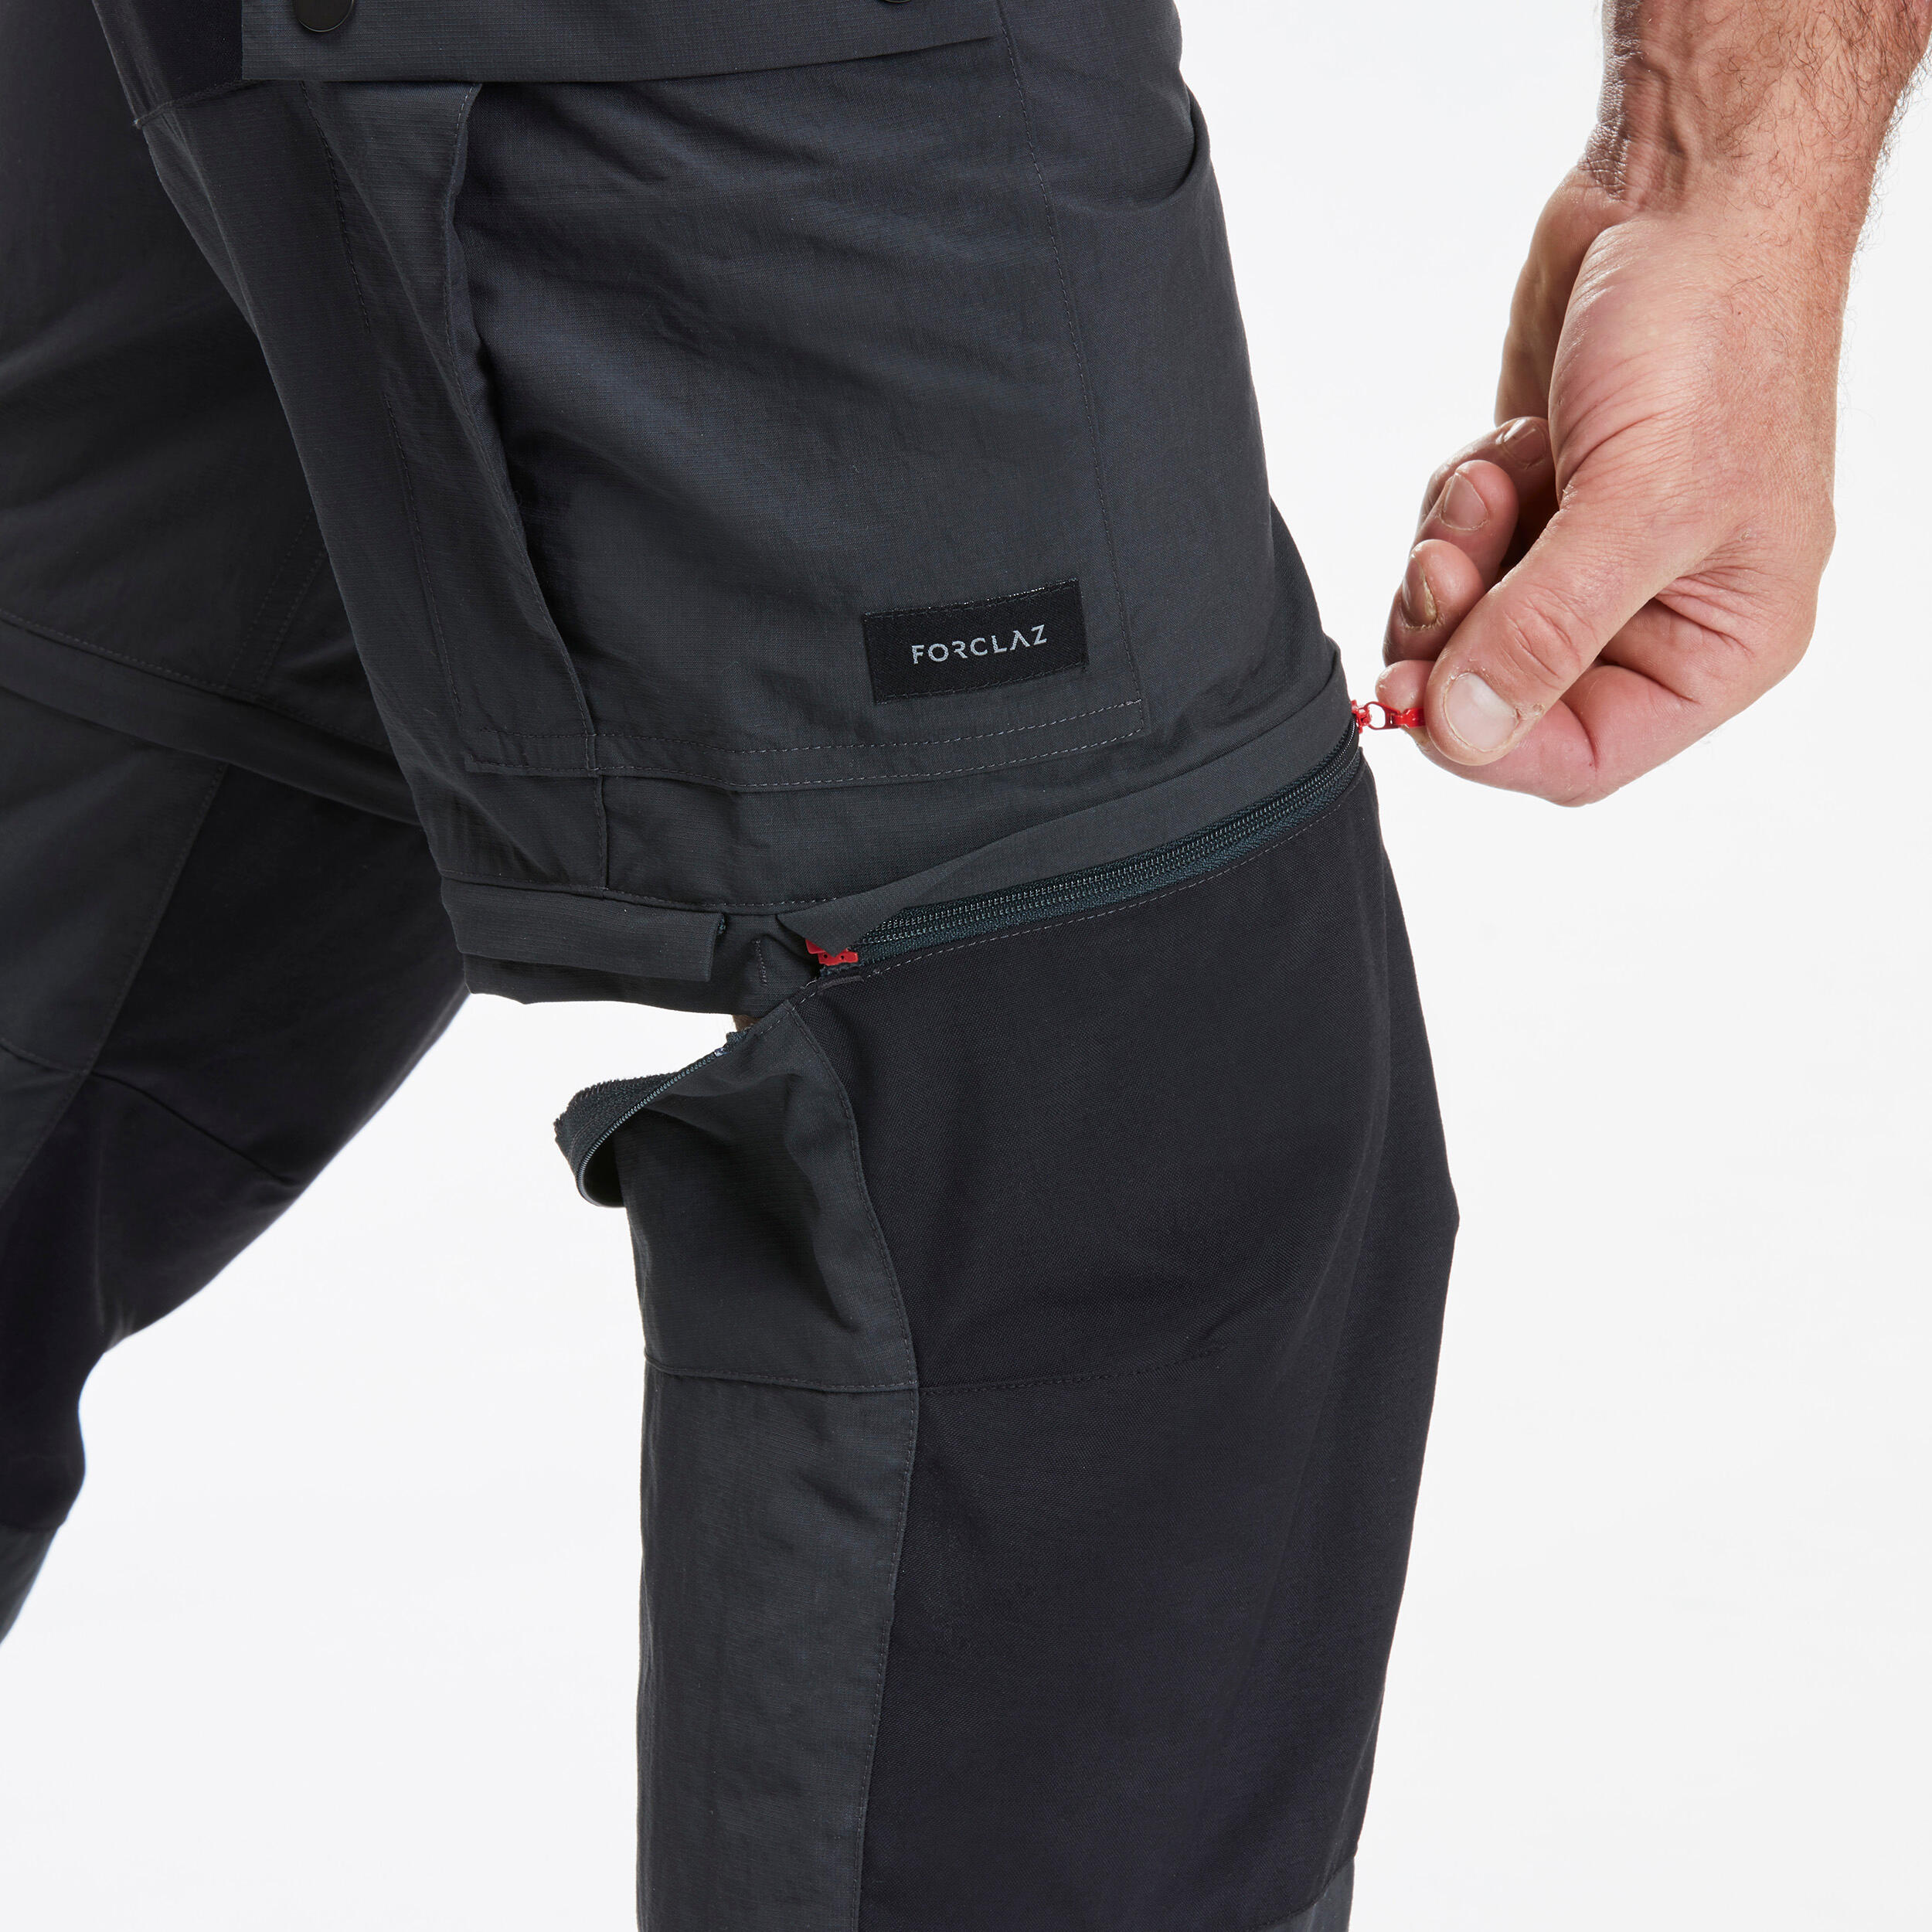 Buy JOMLUN Men's Quick Dry Hiking Pants Outdoor Zip Off Convertible Cargo  Pants Lightweight Travel Mountain Fishing Pants Black at Amazon.in